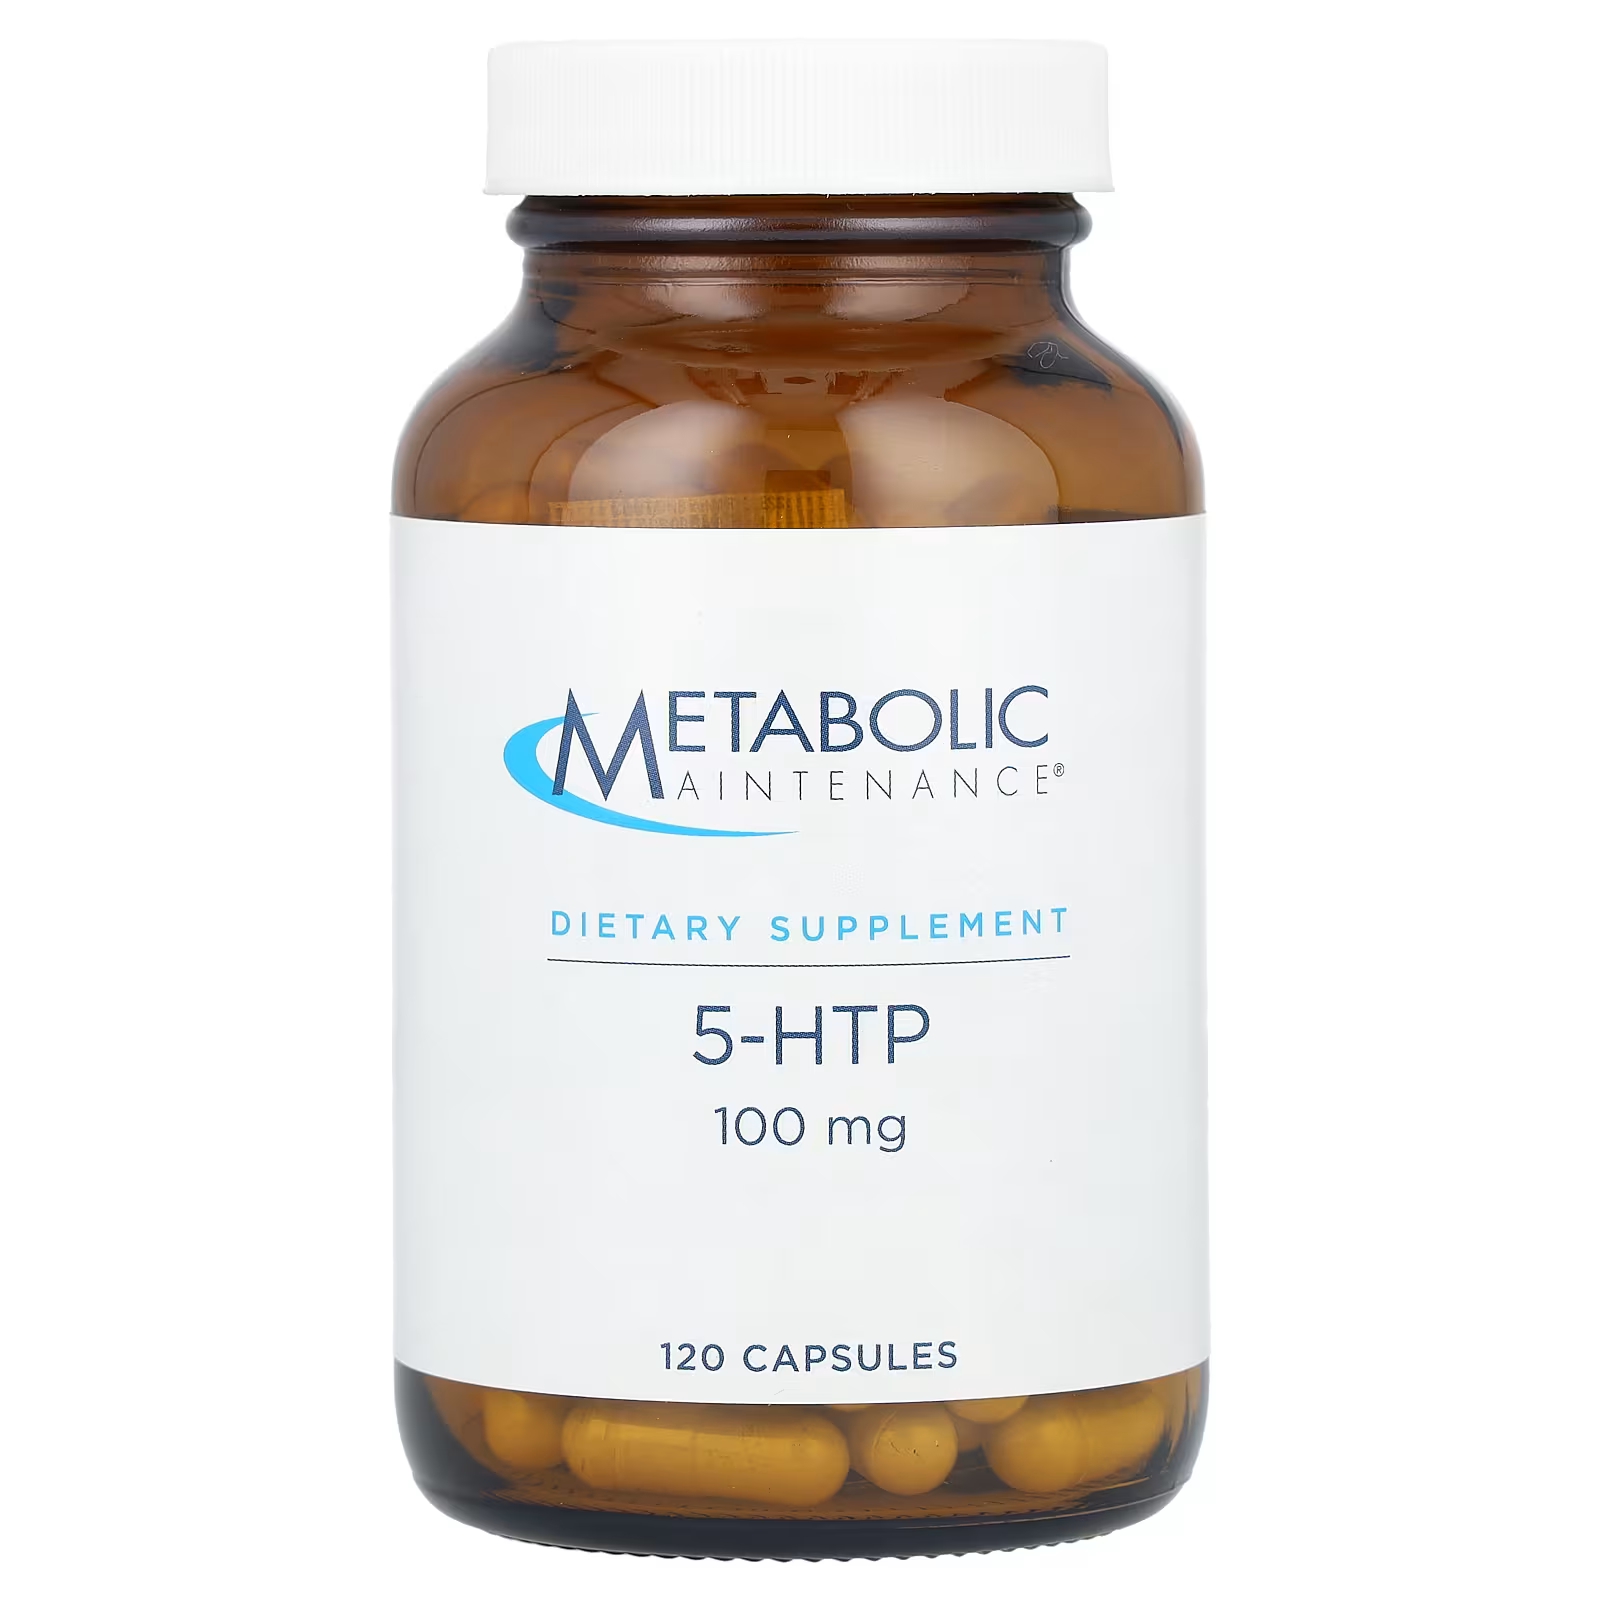 Пищевая добавка Metabolic Maintenance 5-HTP 100 мг, 120 капсул пищевая добавка naturewise 5 htp 100 мг 120 капсул